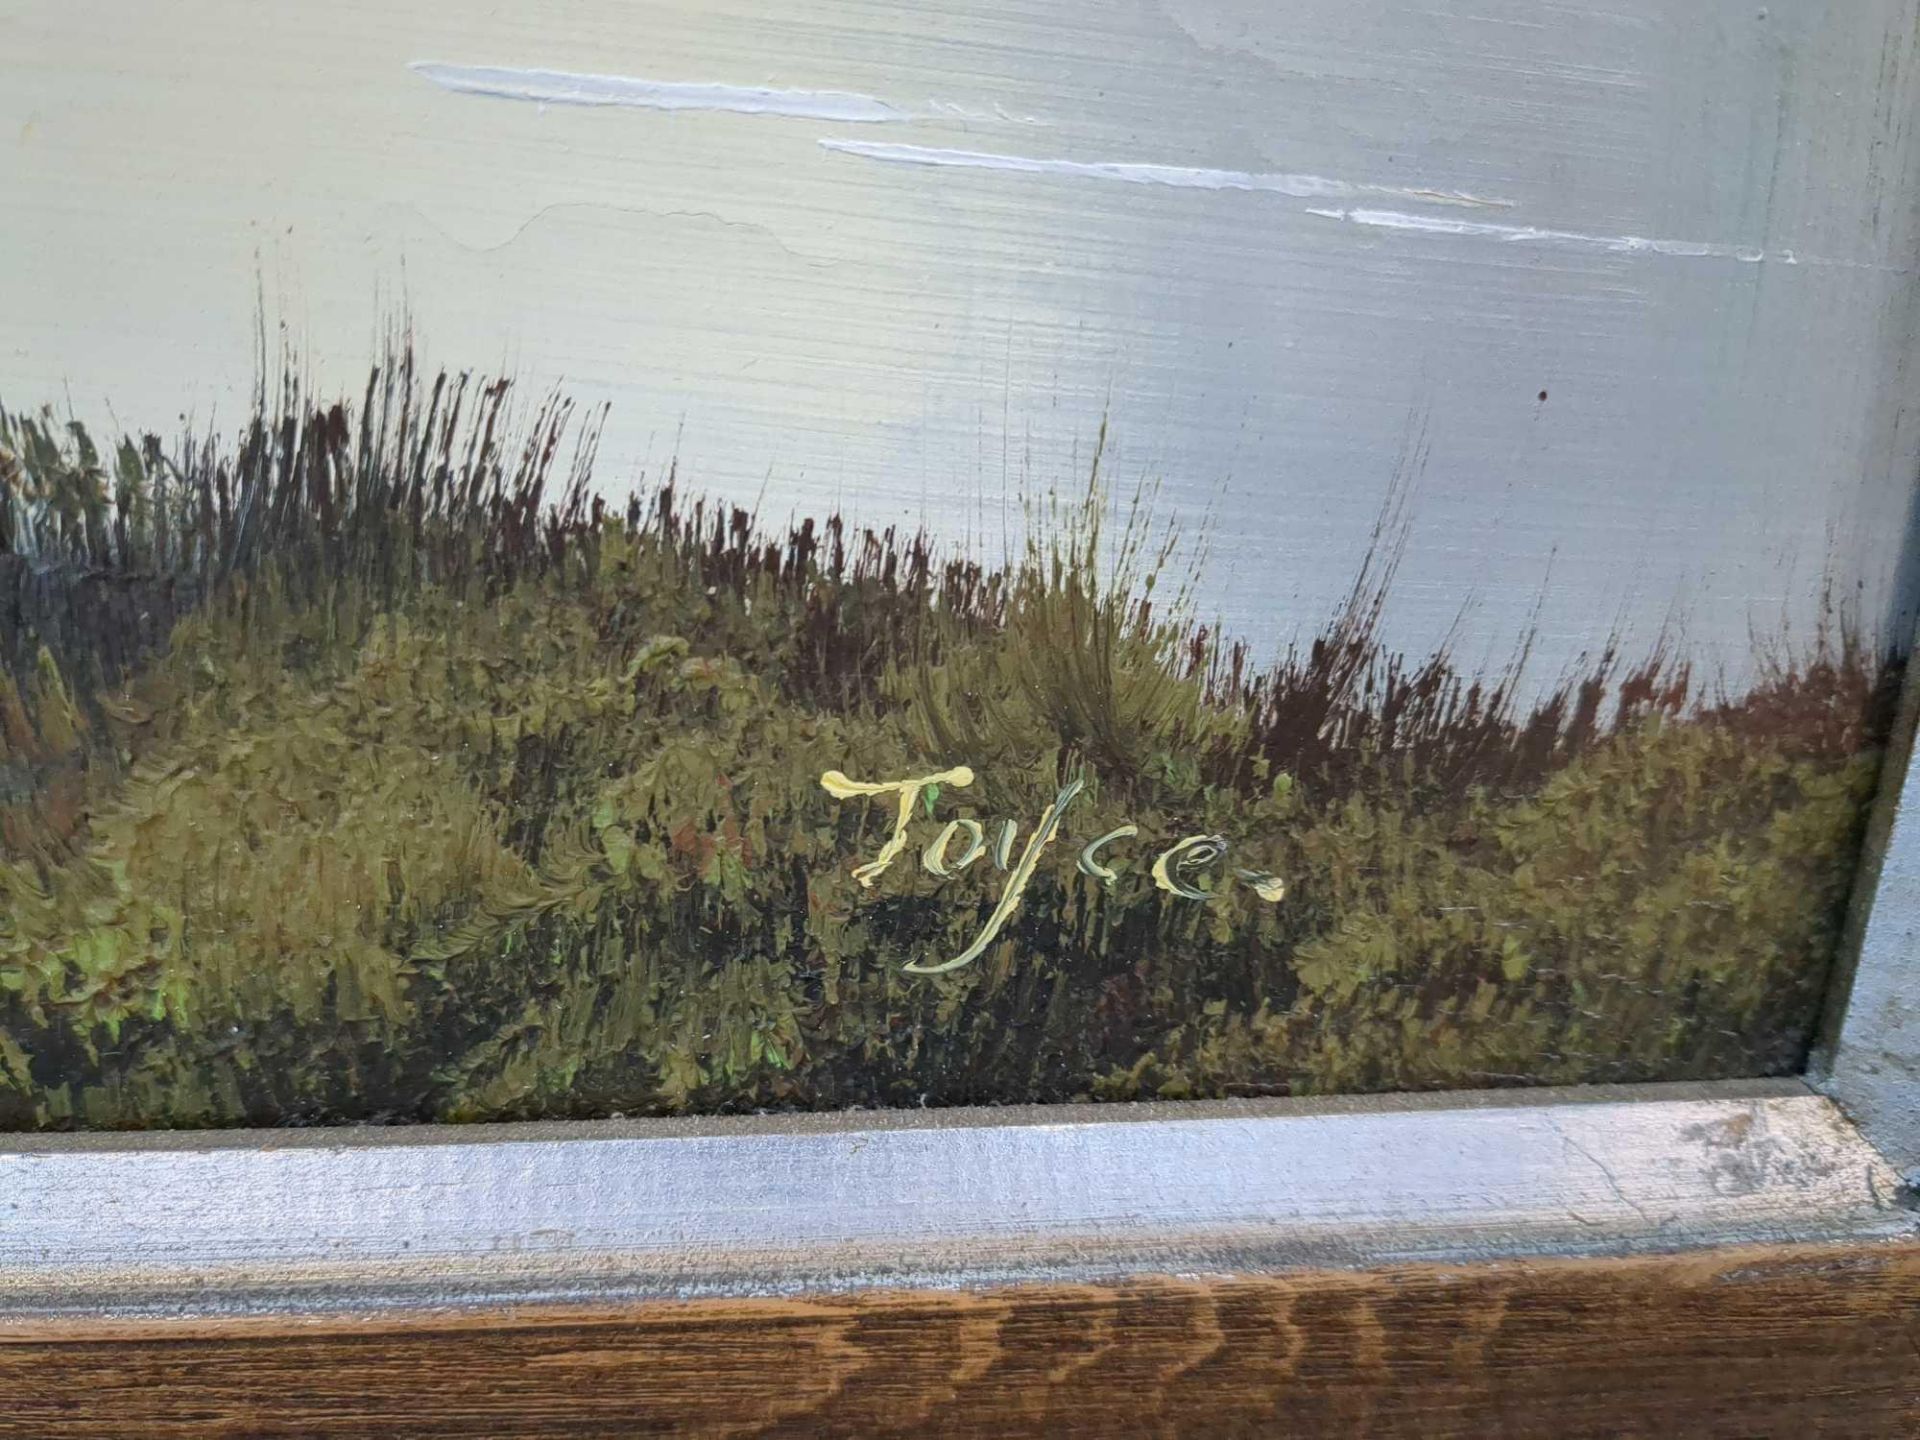 Art: Framed Oil on canvas River Mountain Scene by Joyce - Image 3 of 4